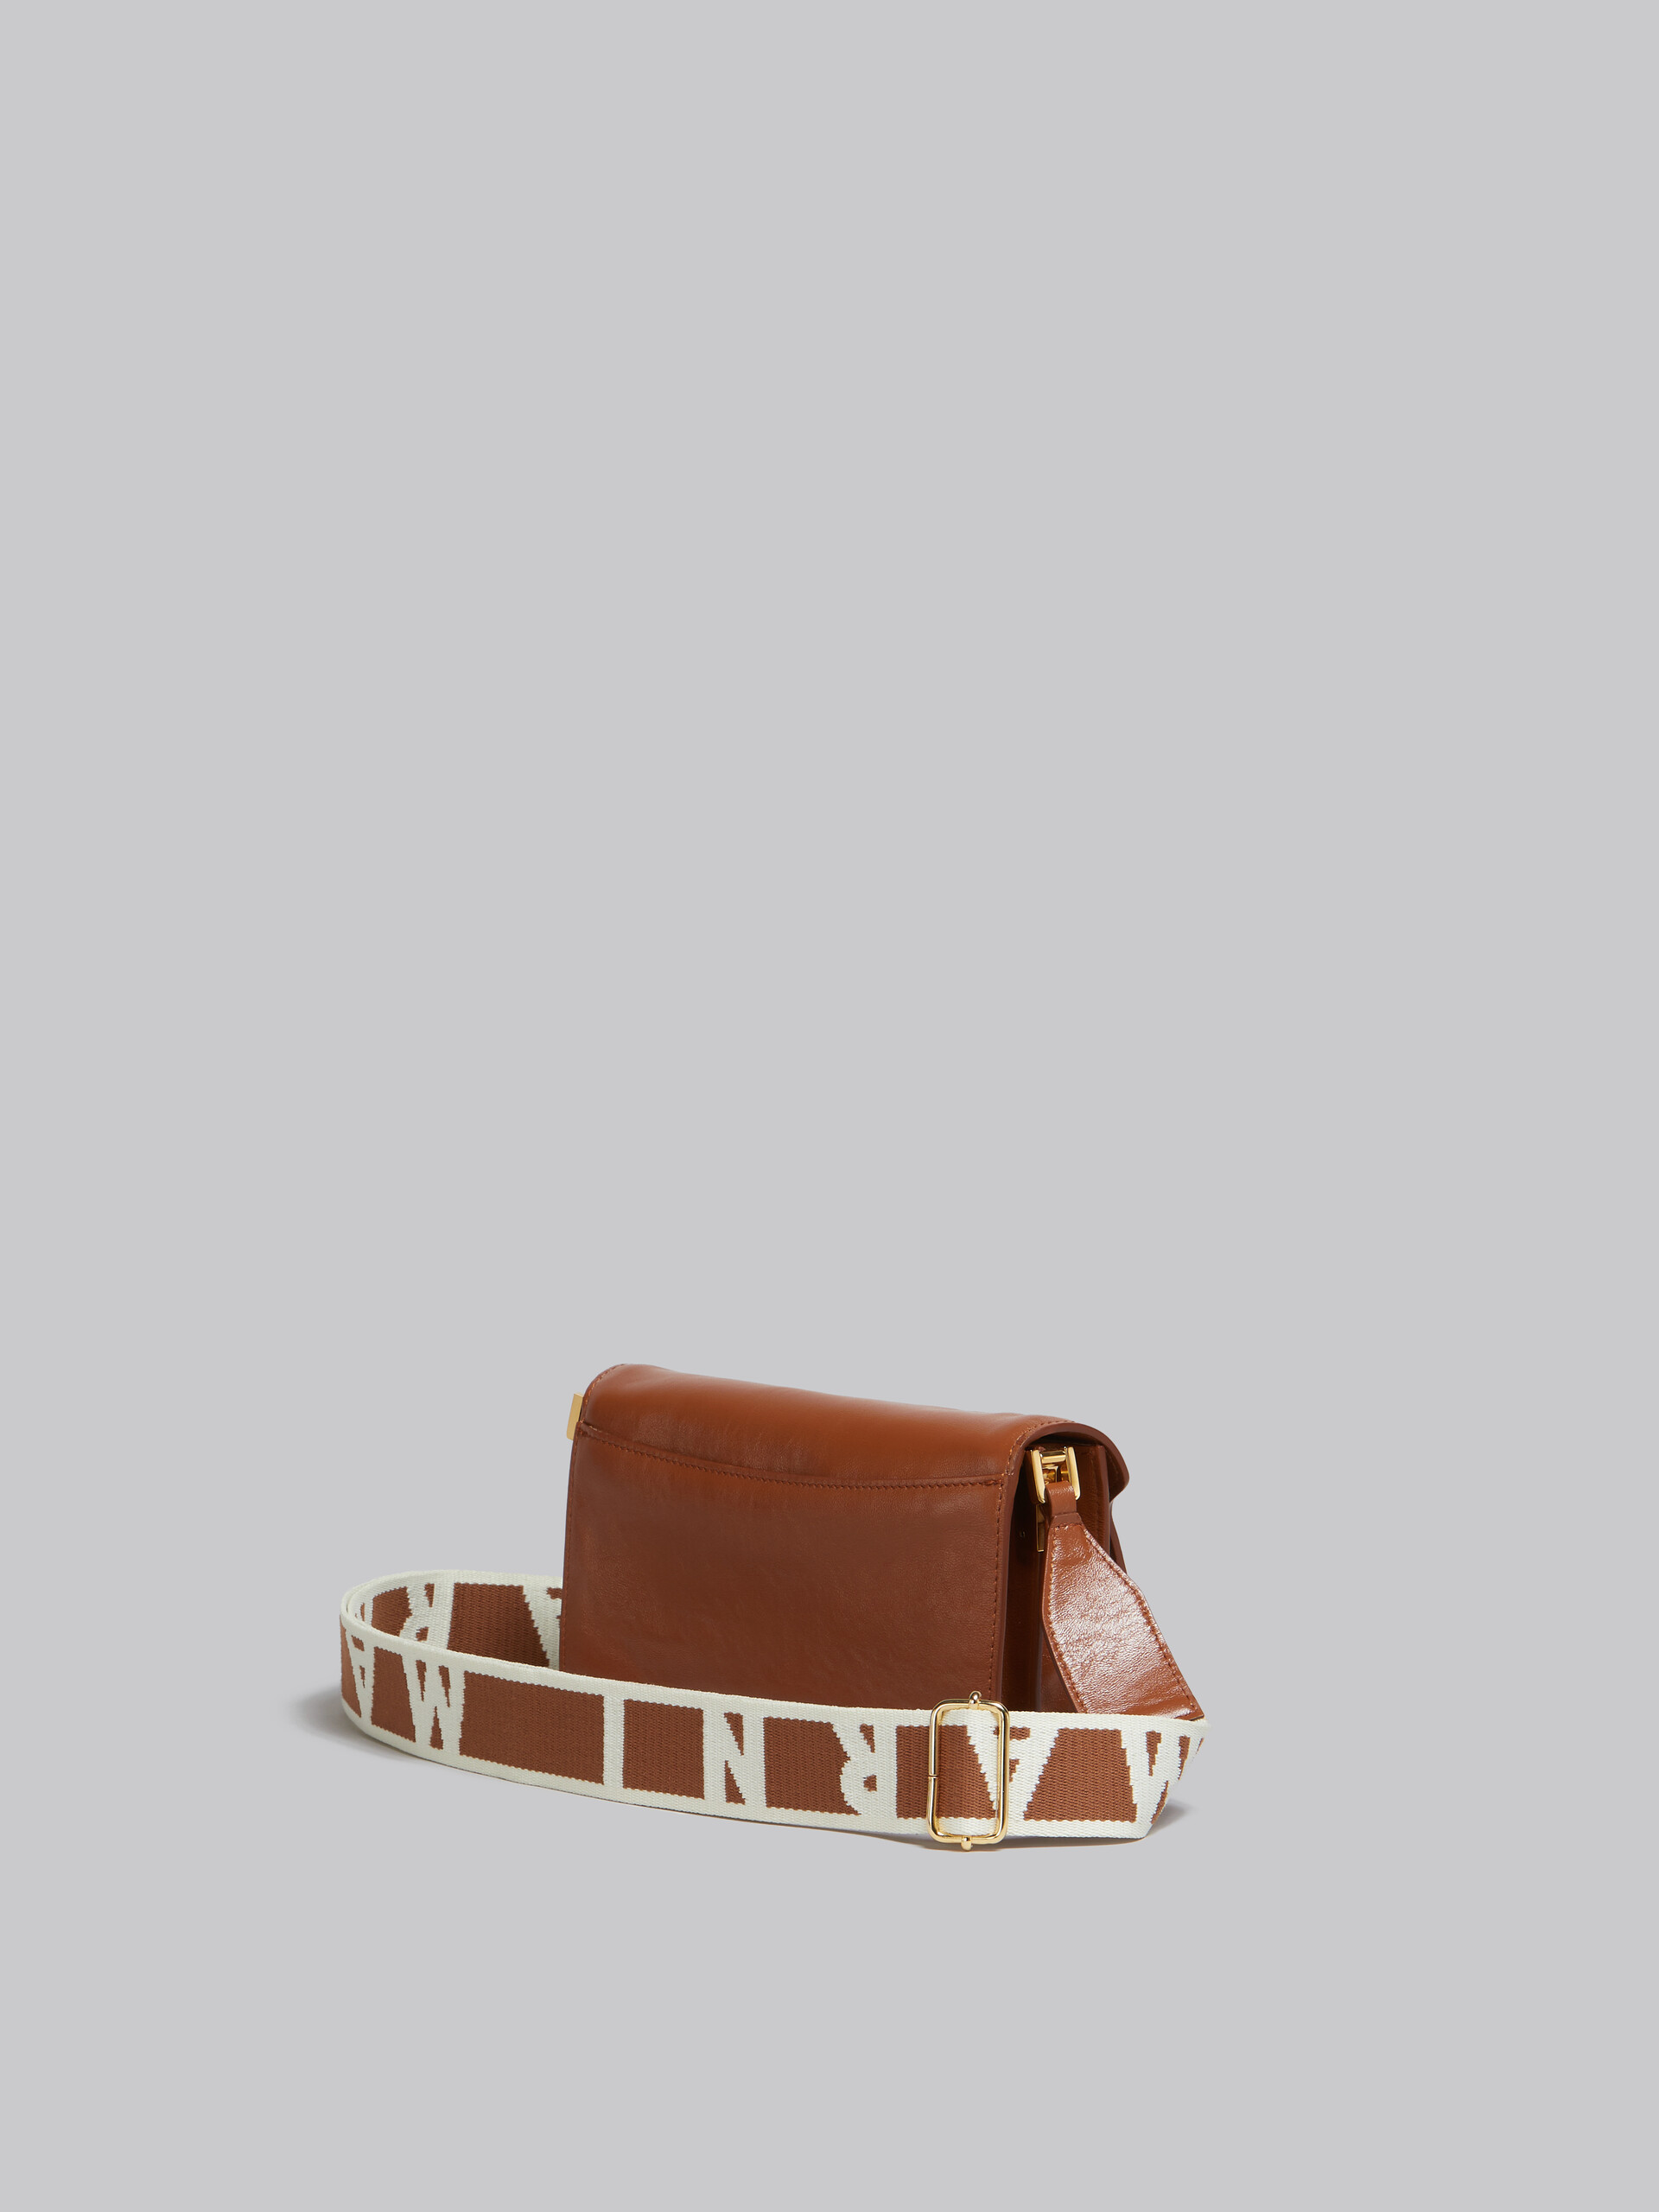 Brown leather E/W Soft Trunk Bag with logo strap - Shoulder Bag - Image 3